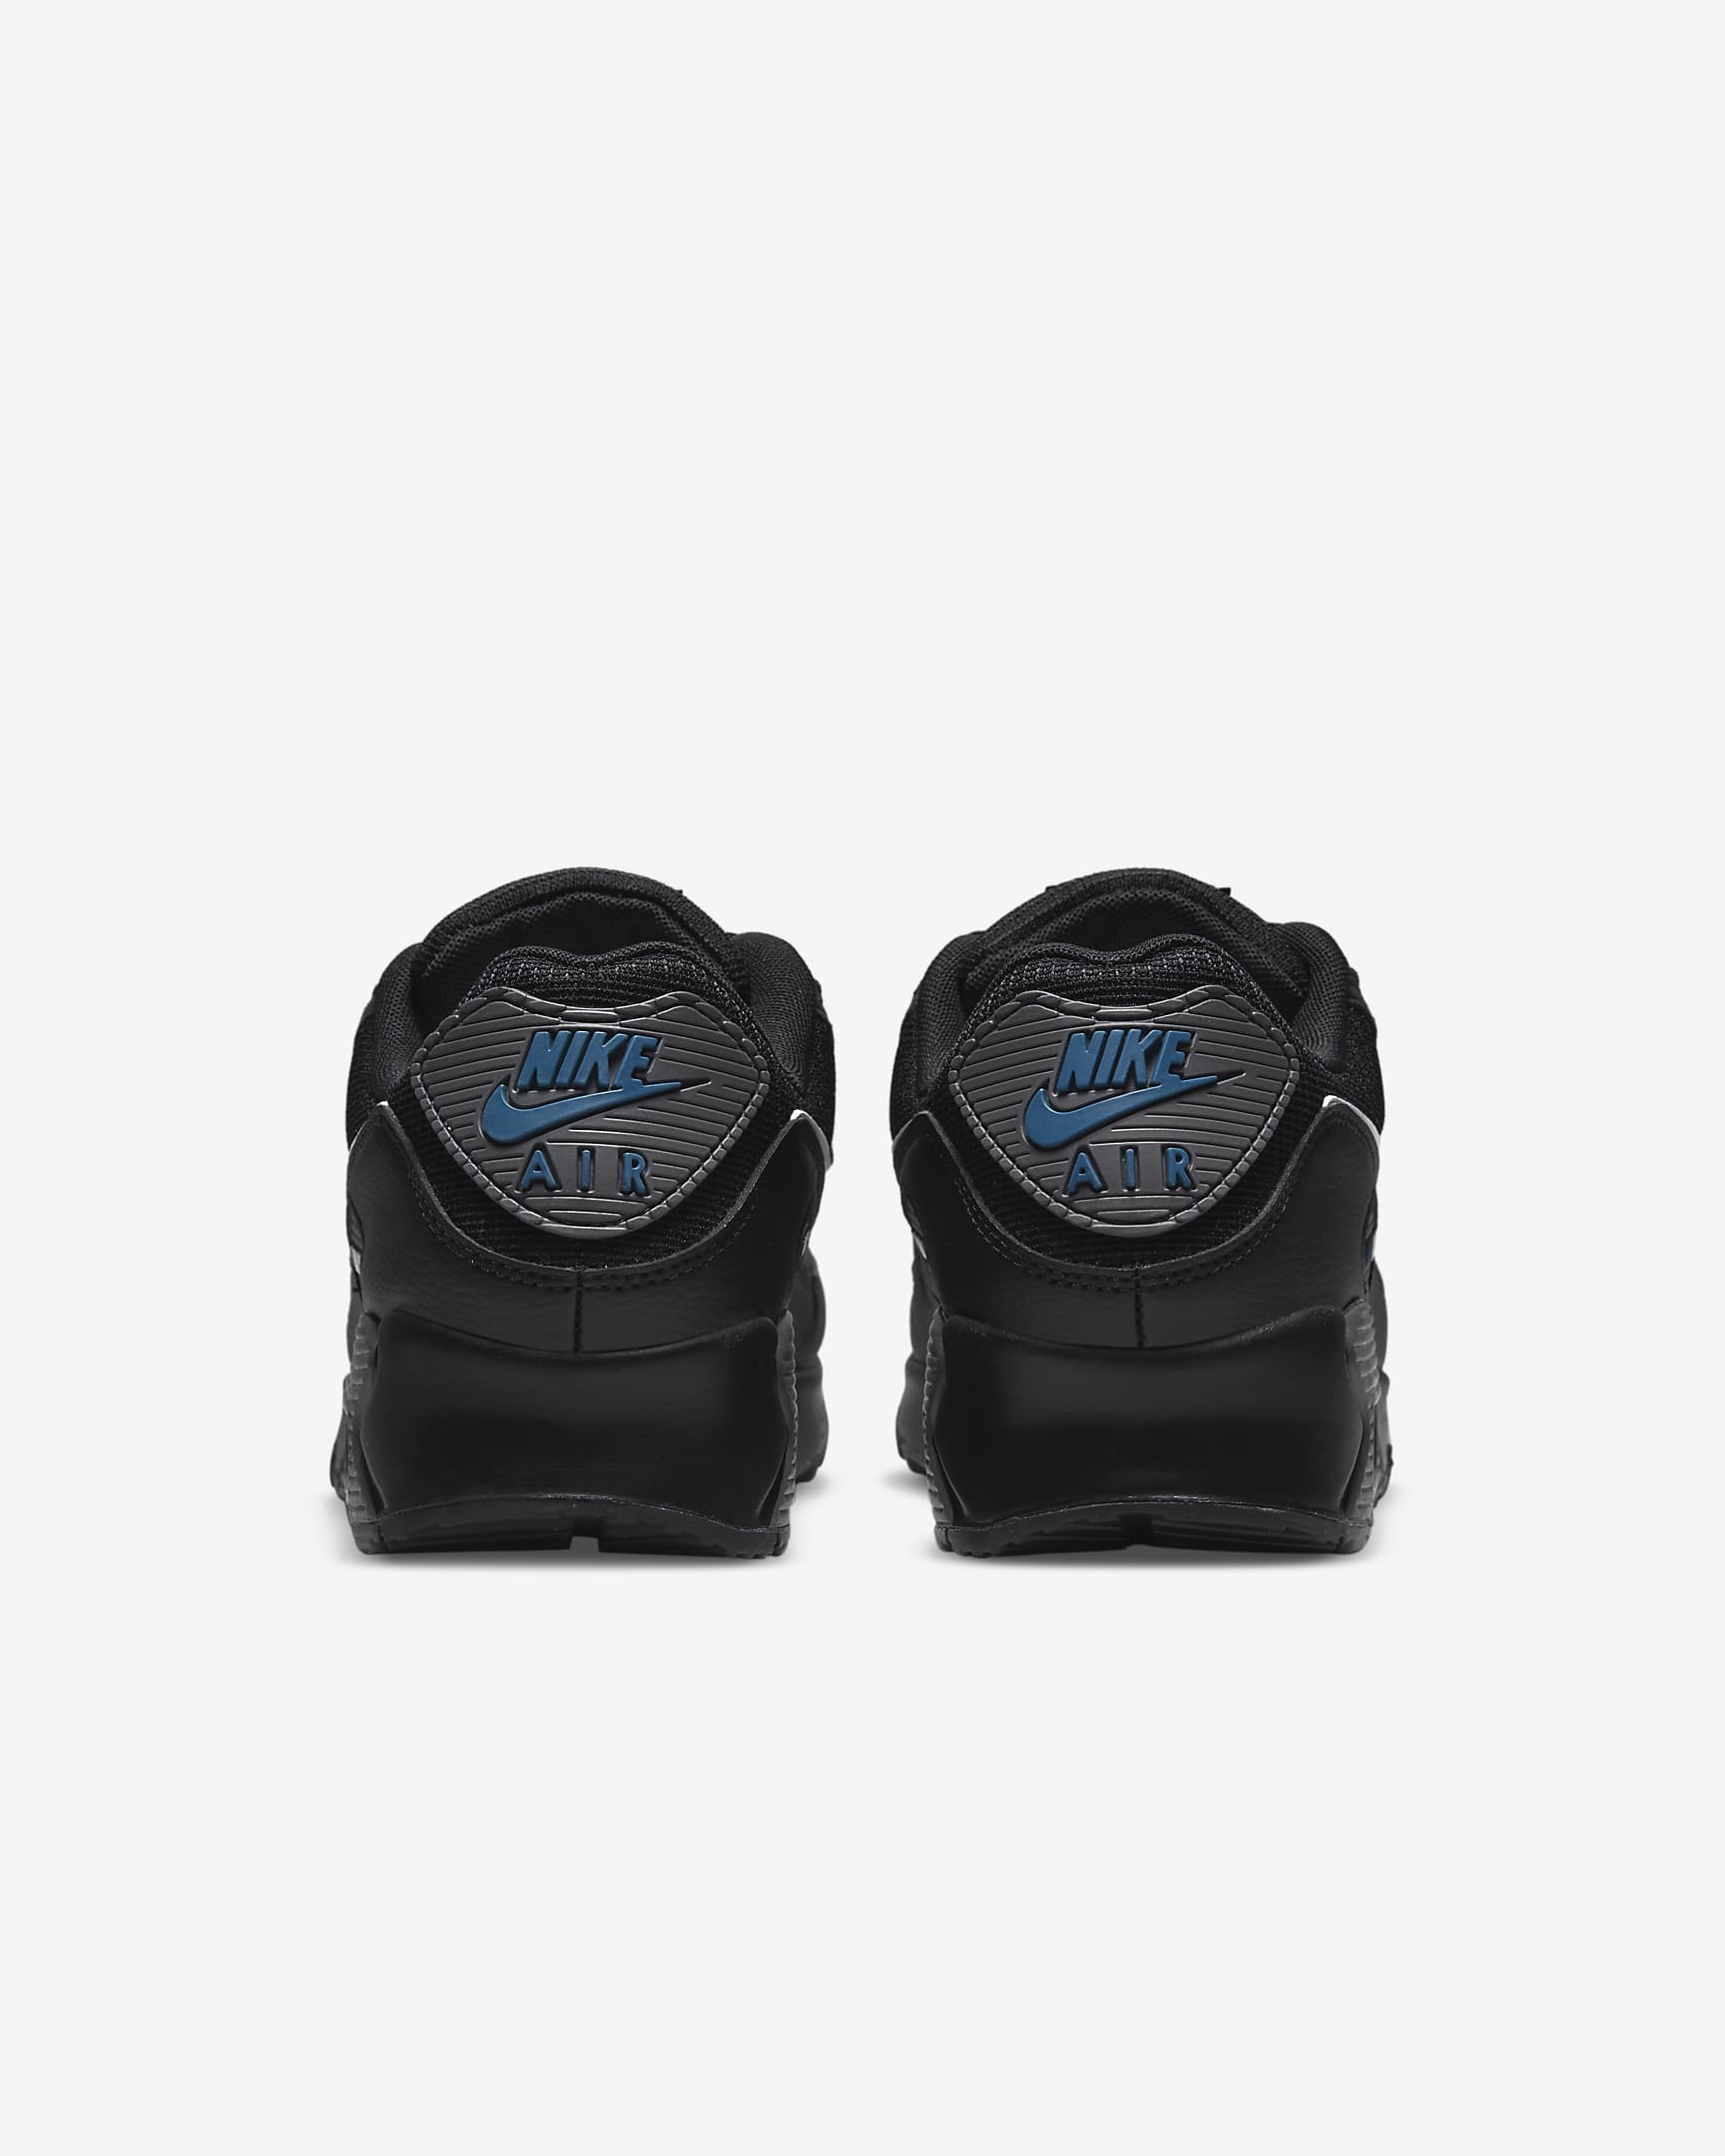 Pánské boty Nike Air Max 90 - Černá/Marina/Iron Grey/Bílá